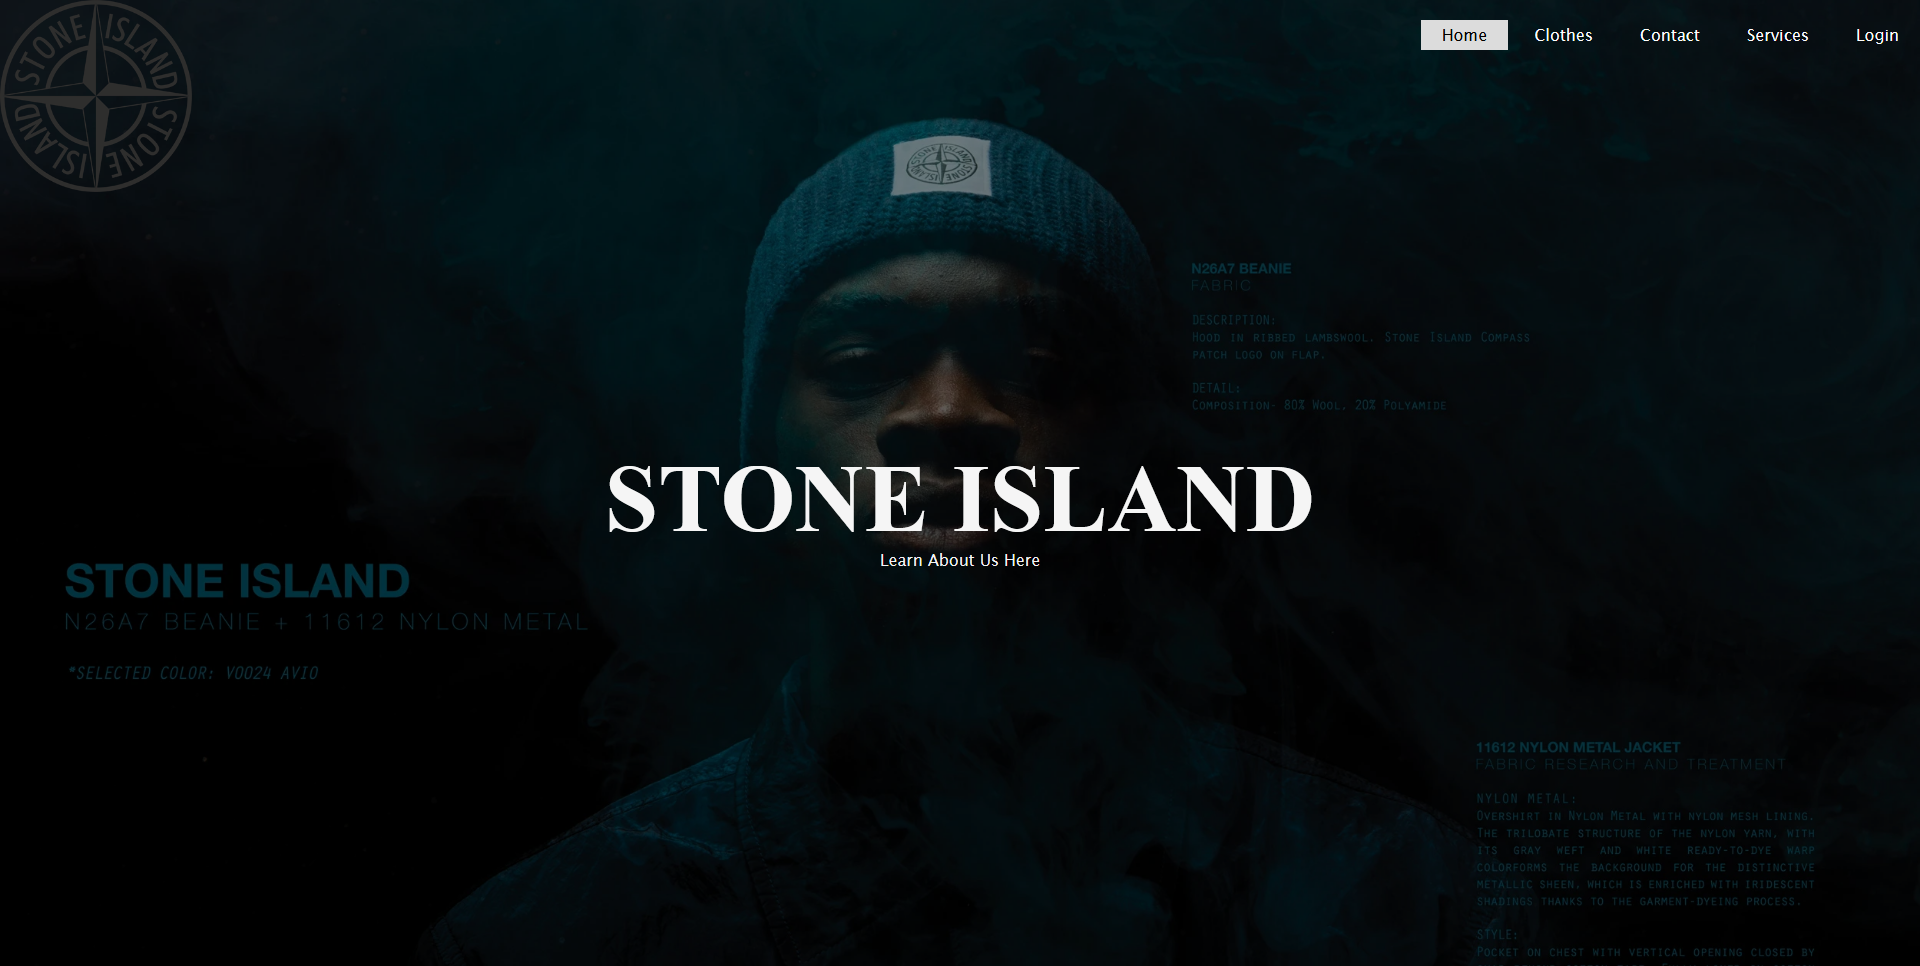 Стон айленд песня. Stone Island обои на рабочий стол. Стон Исланд обои на ПК. Стон Айленд на рабочий стол 1920 1080.